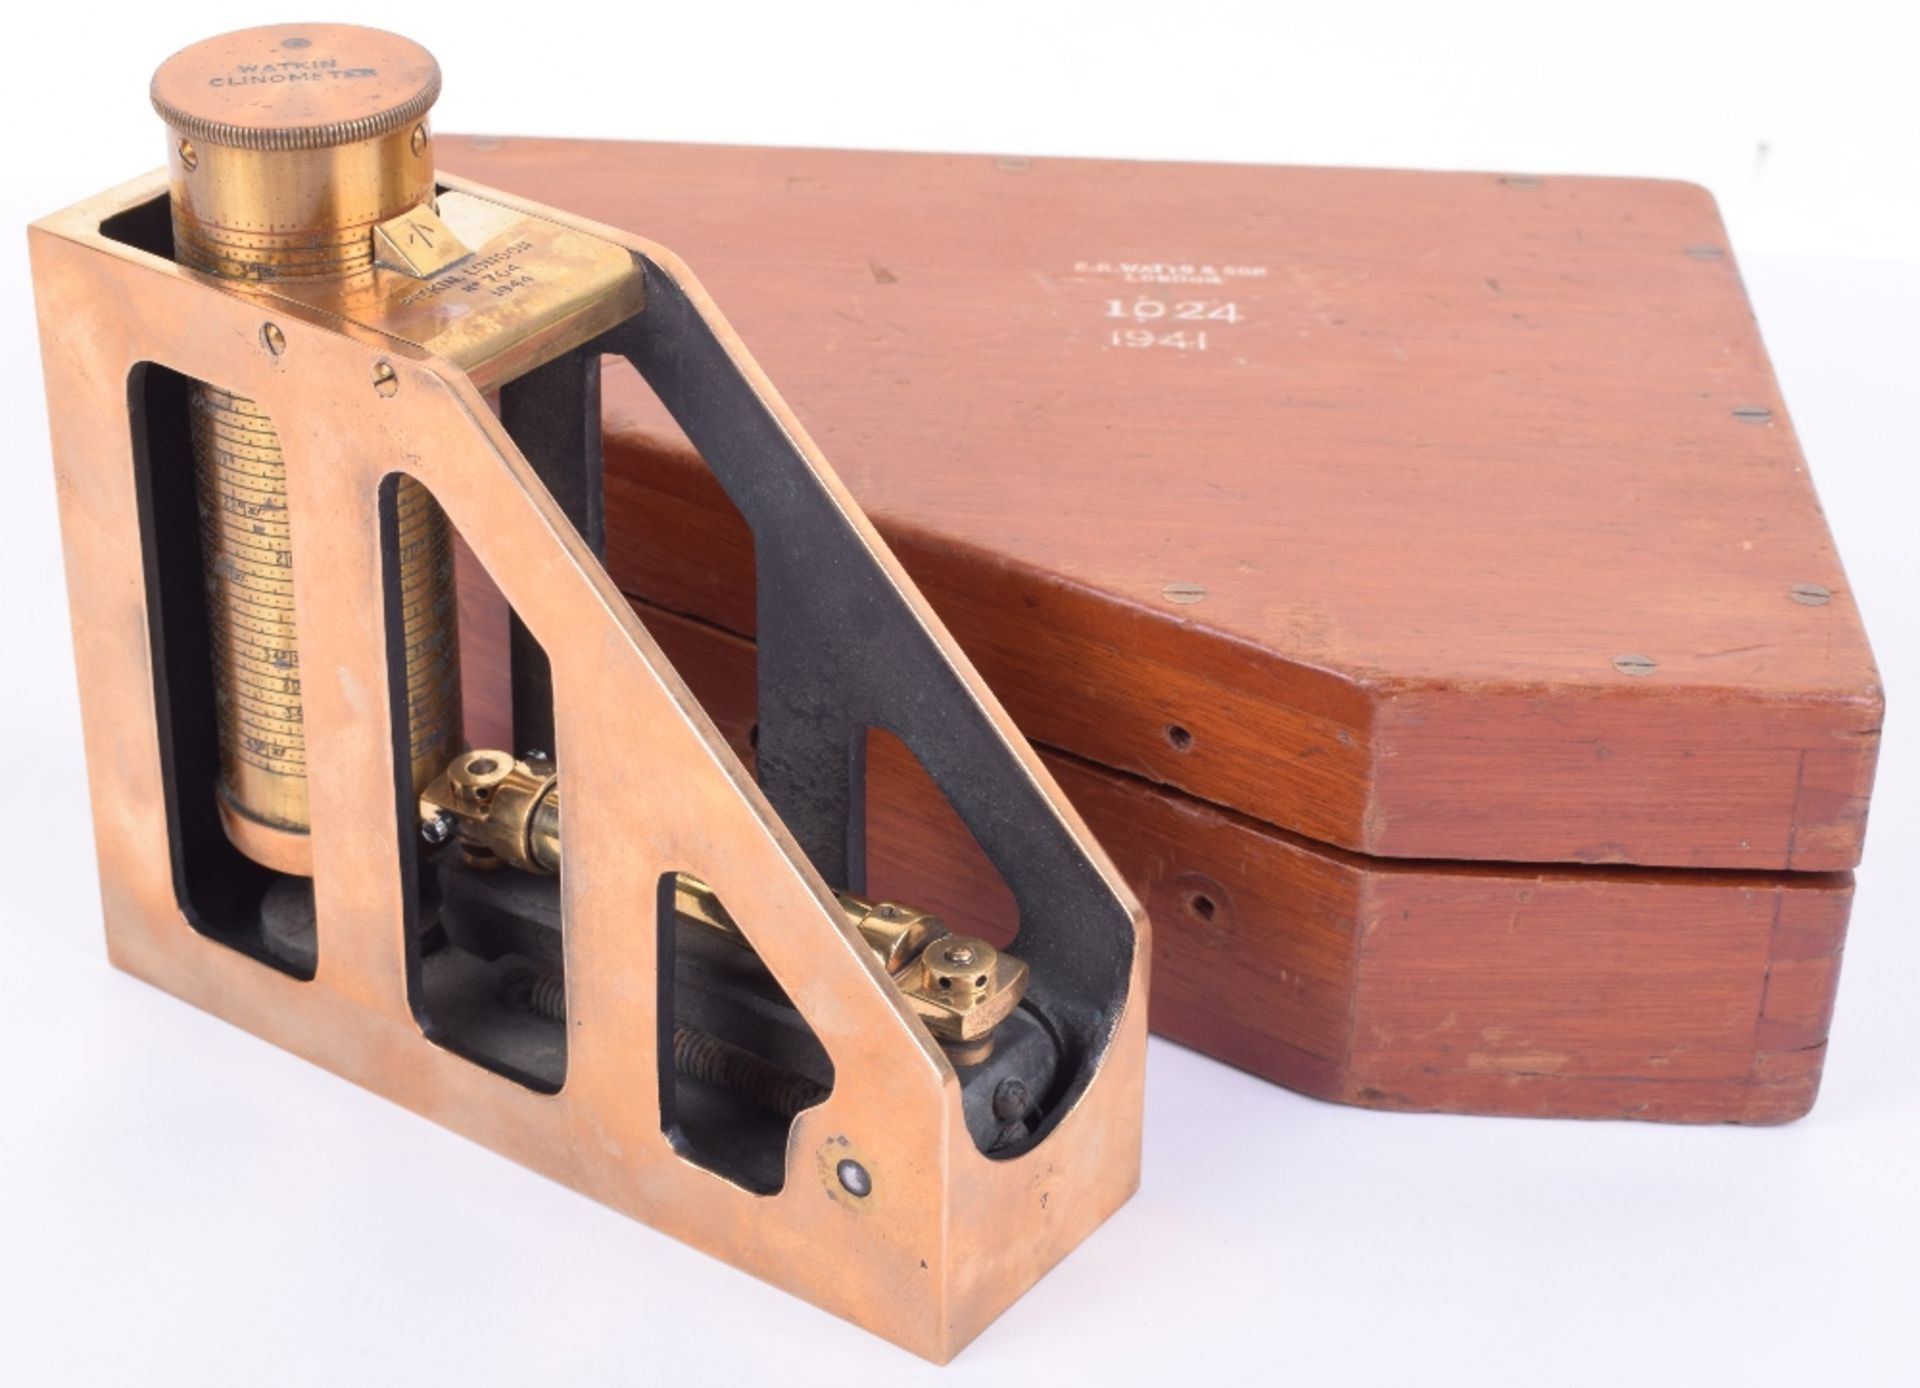 1941 Brass Watkin Clinometer by Pitkin London